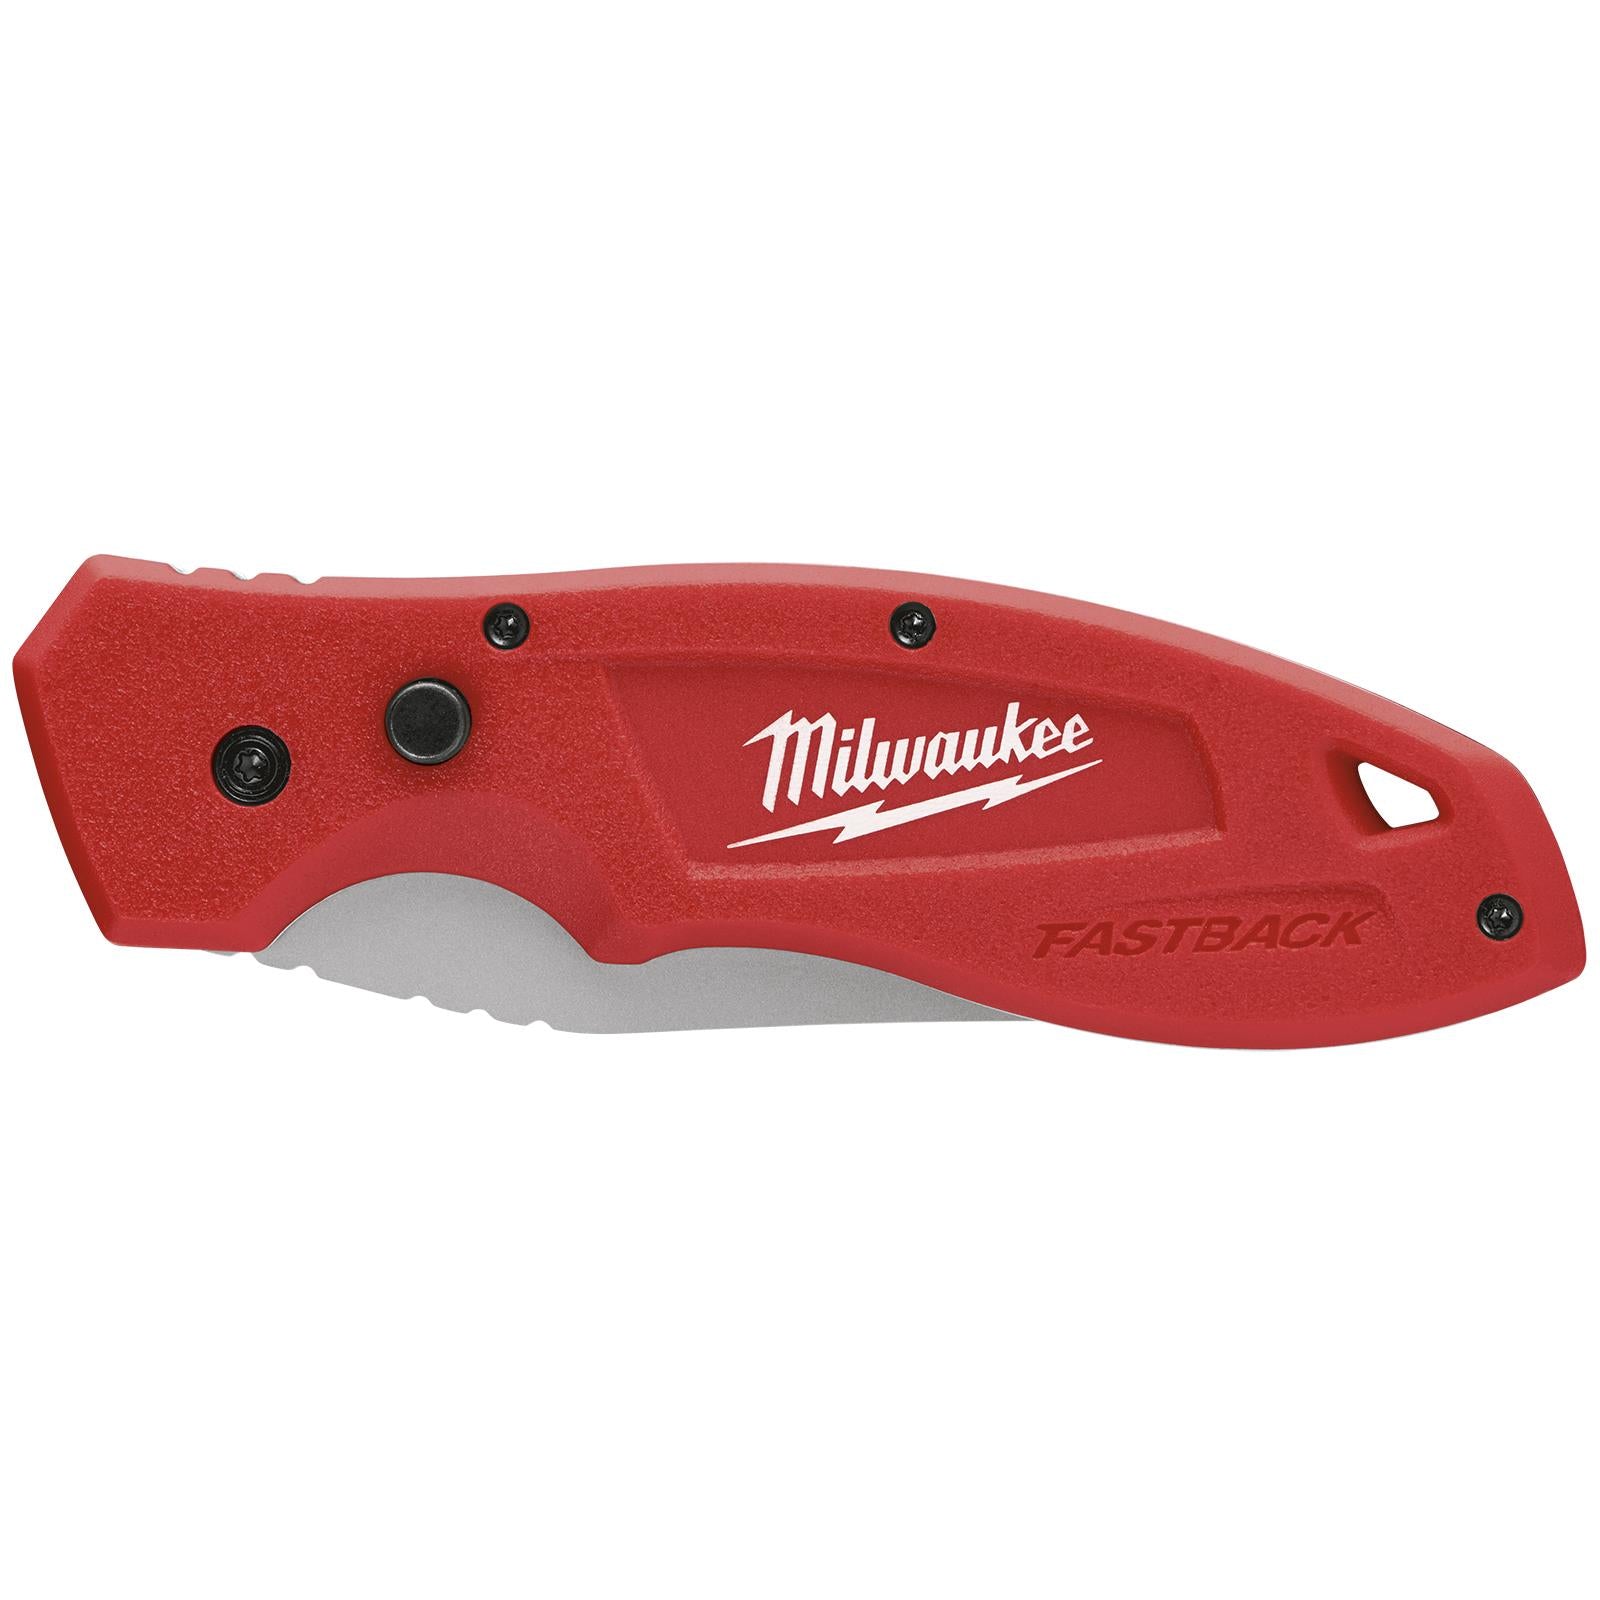 Milwaukee FASTBACK Folding Knife